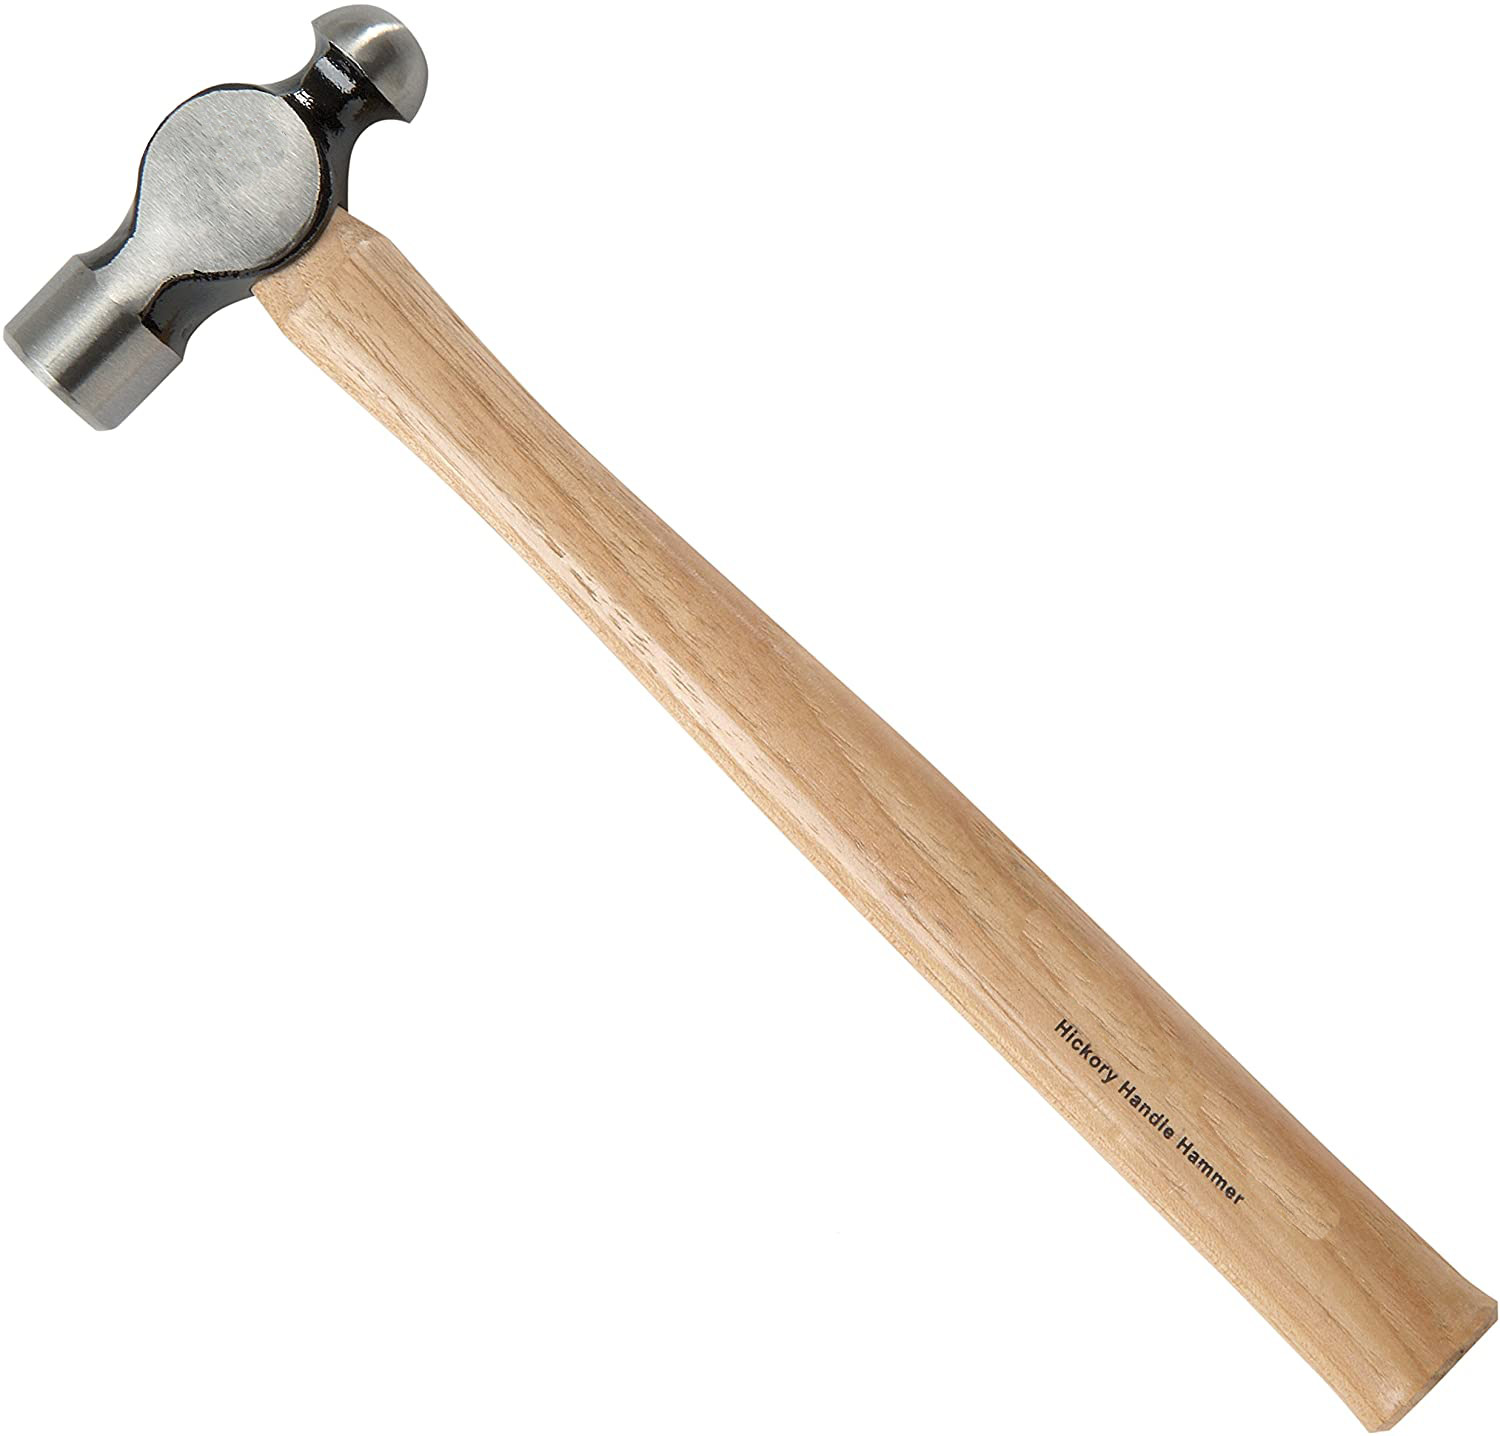 24OZ Ball Peen Hammer with wood handle